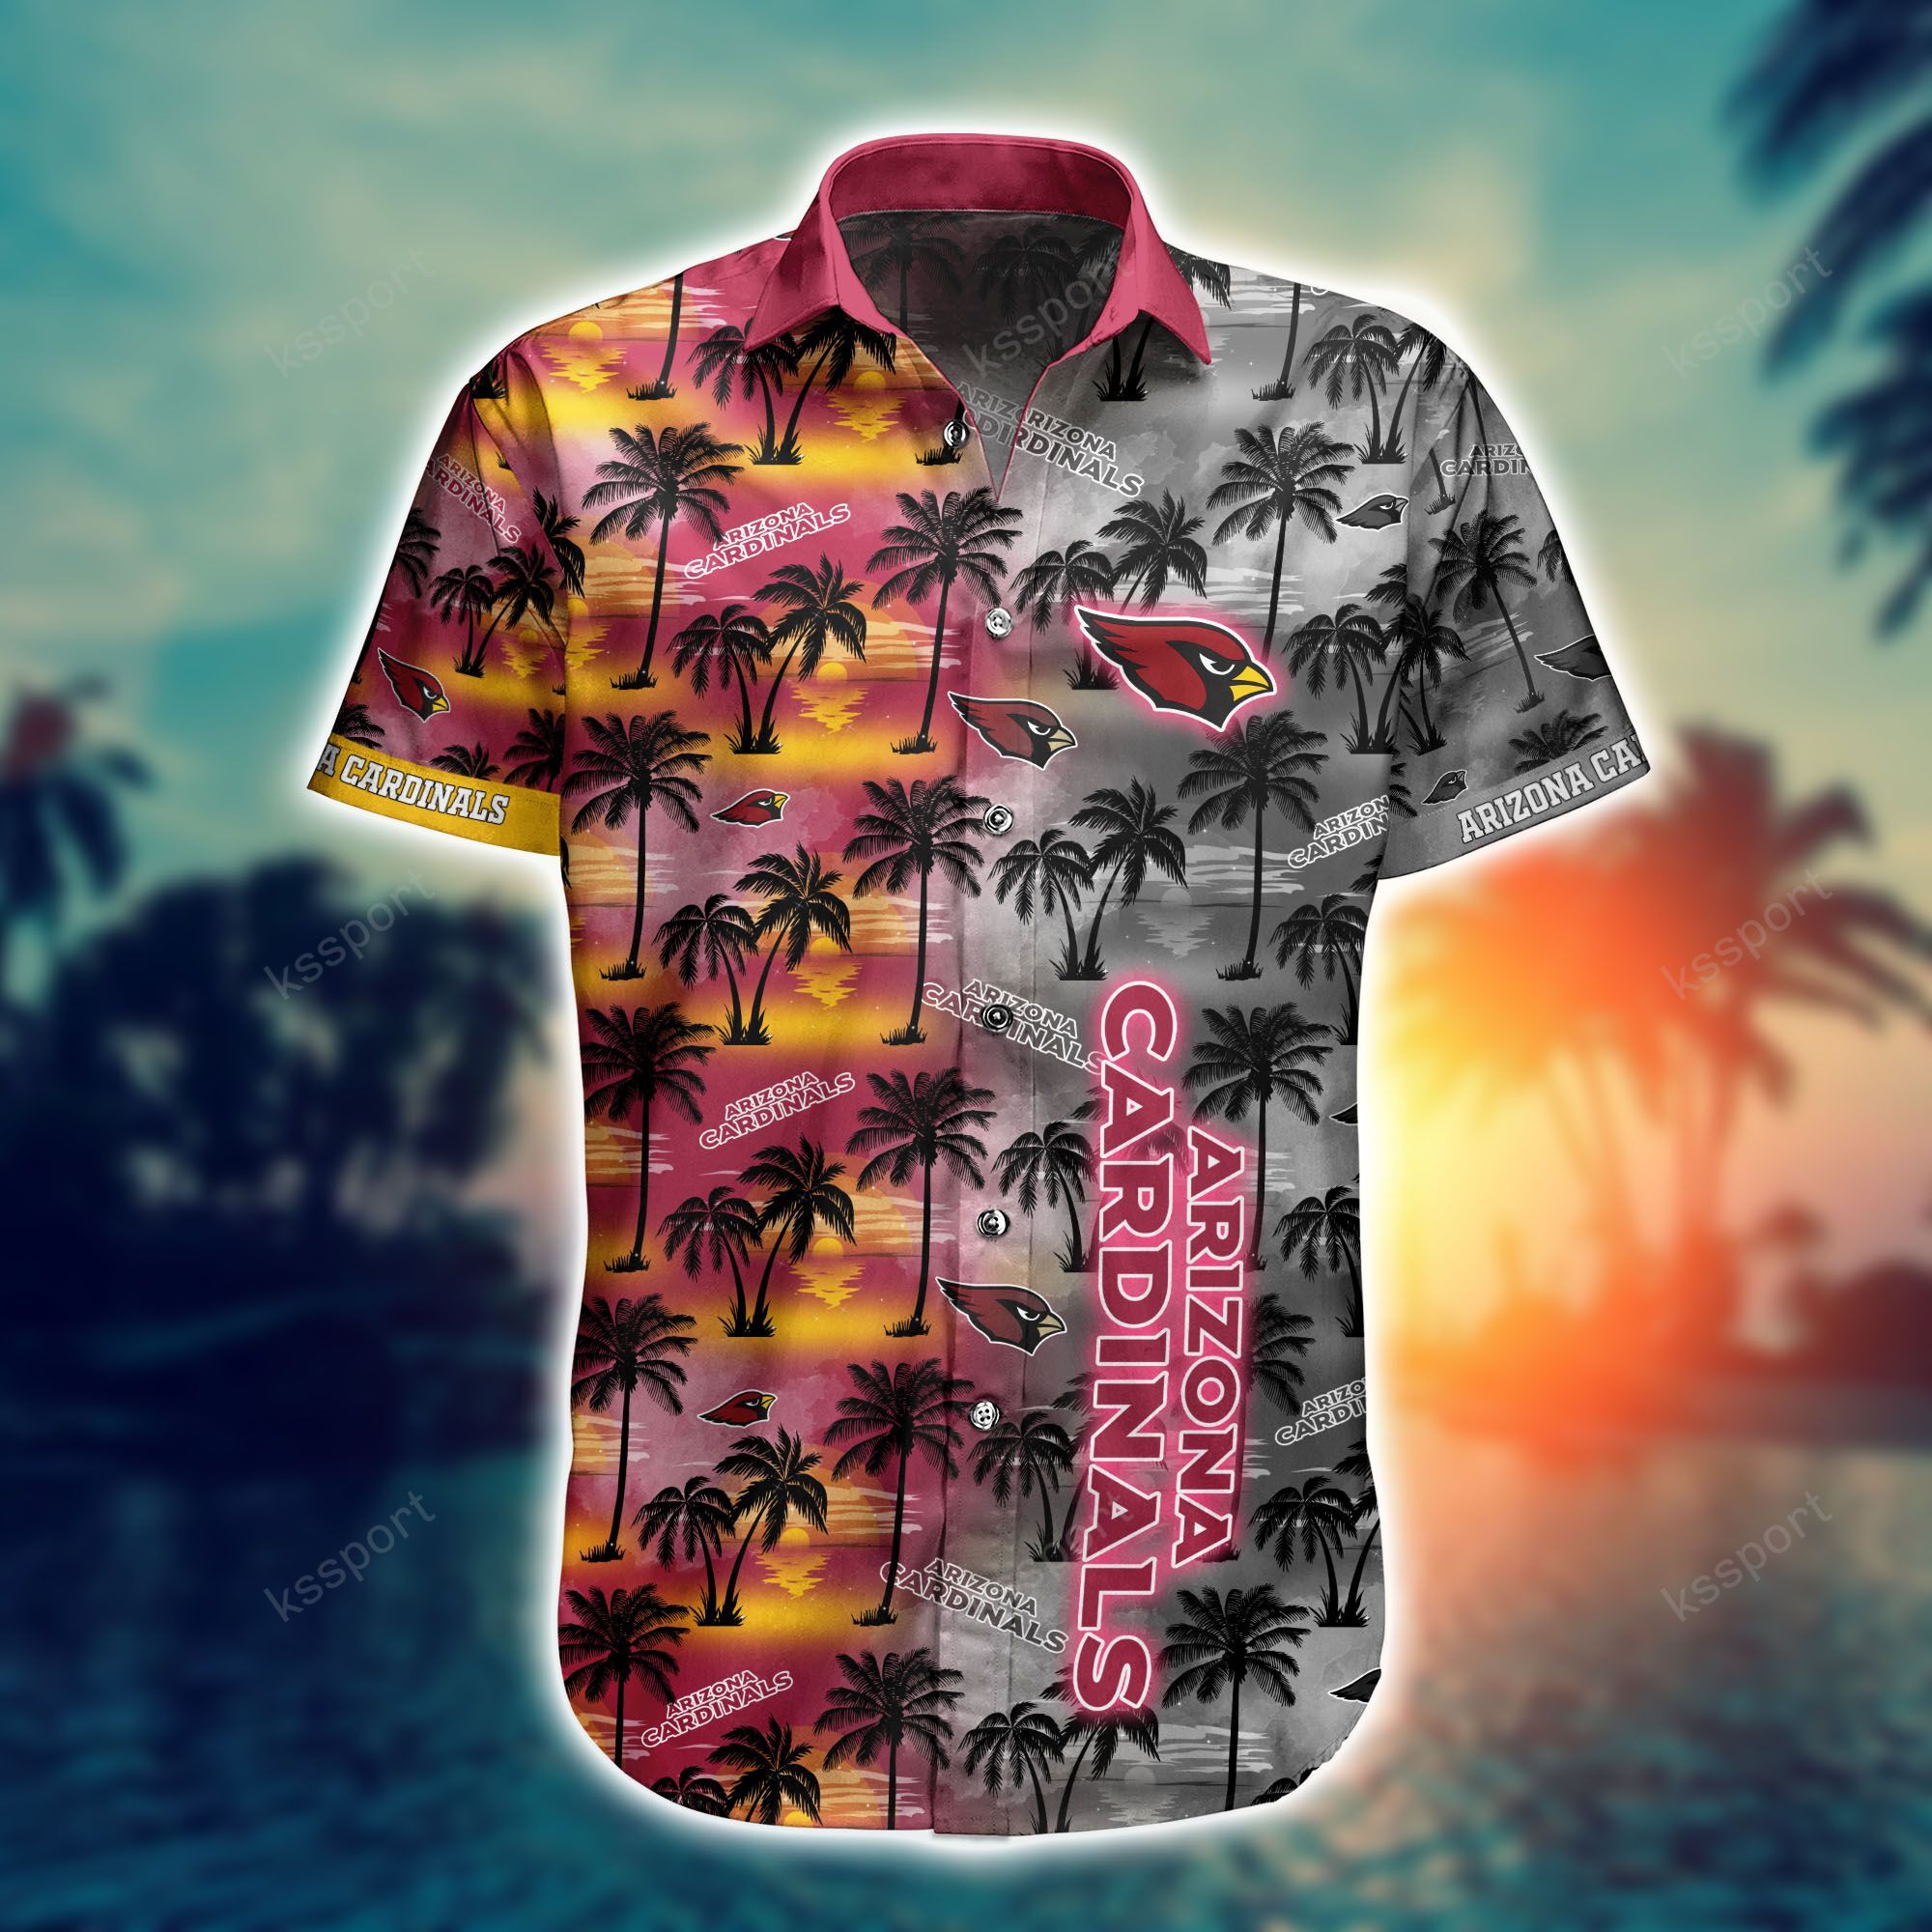 Hawaiian shirt and shorts is a great way to look stylish at a beach party 33